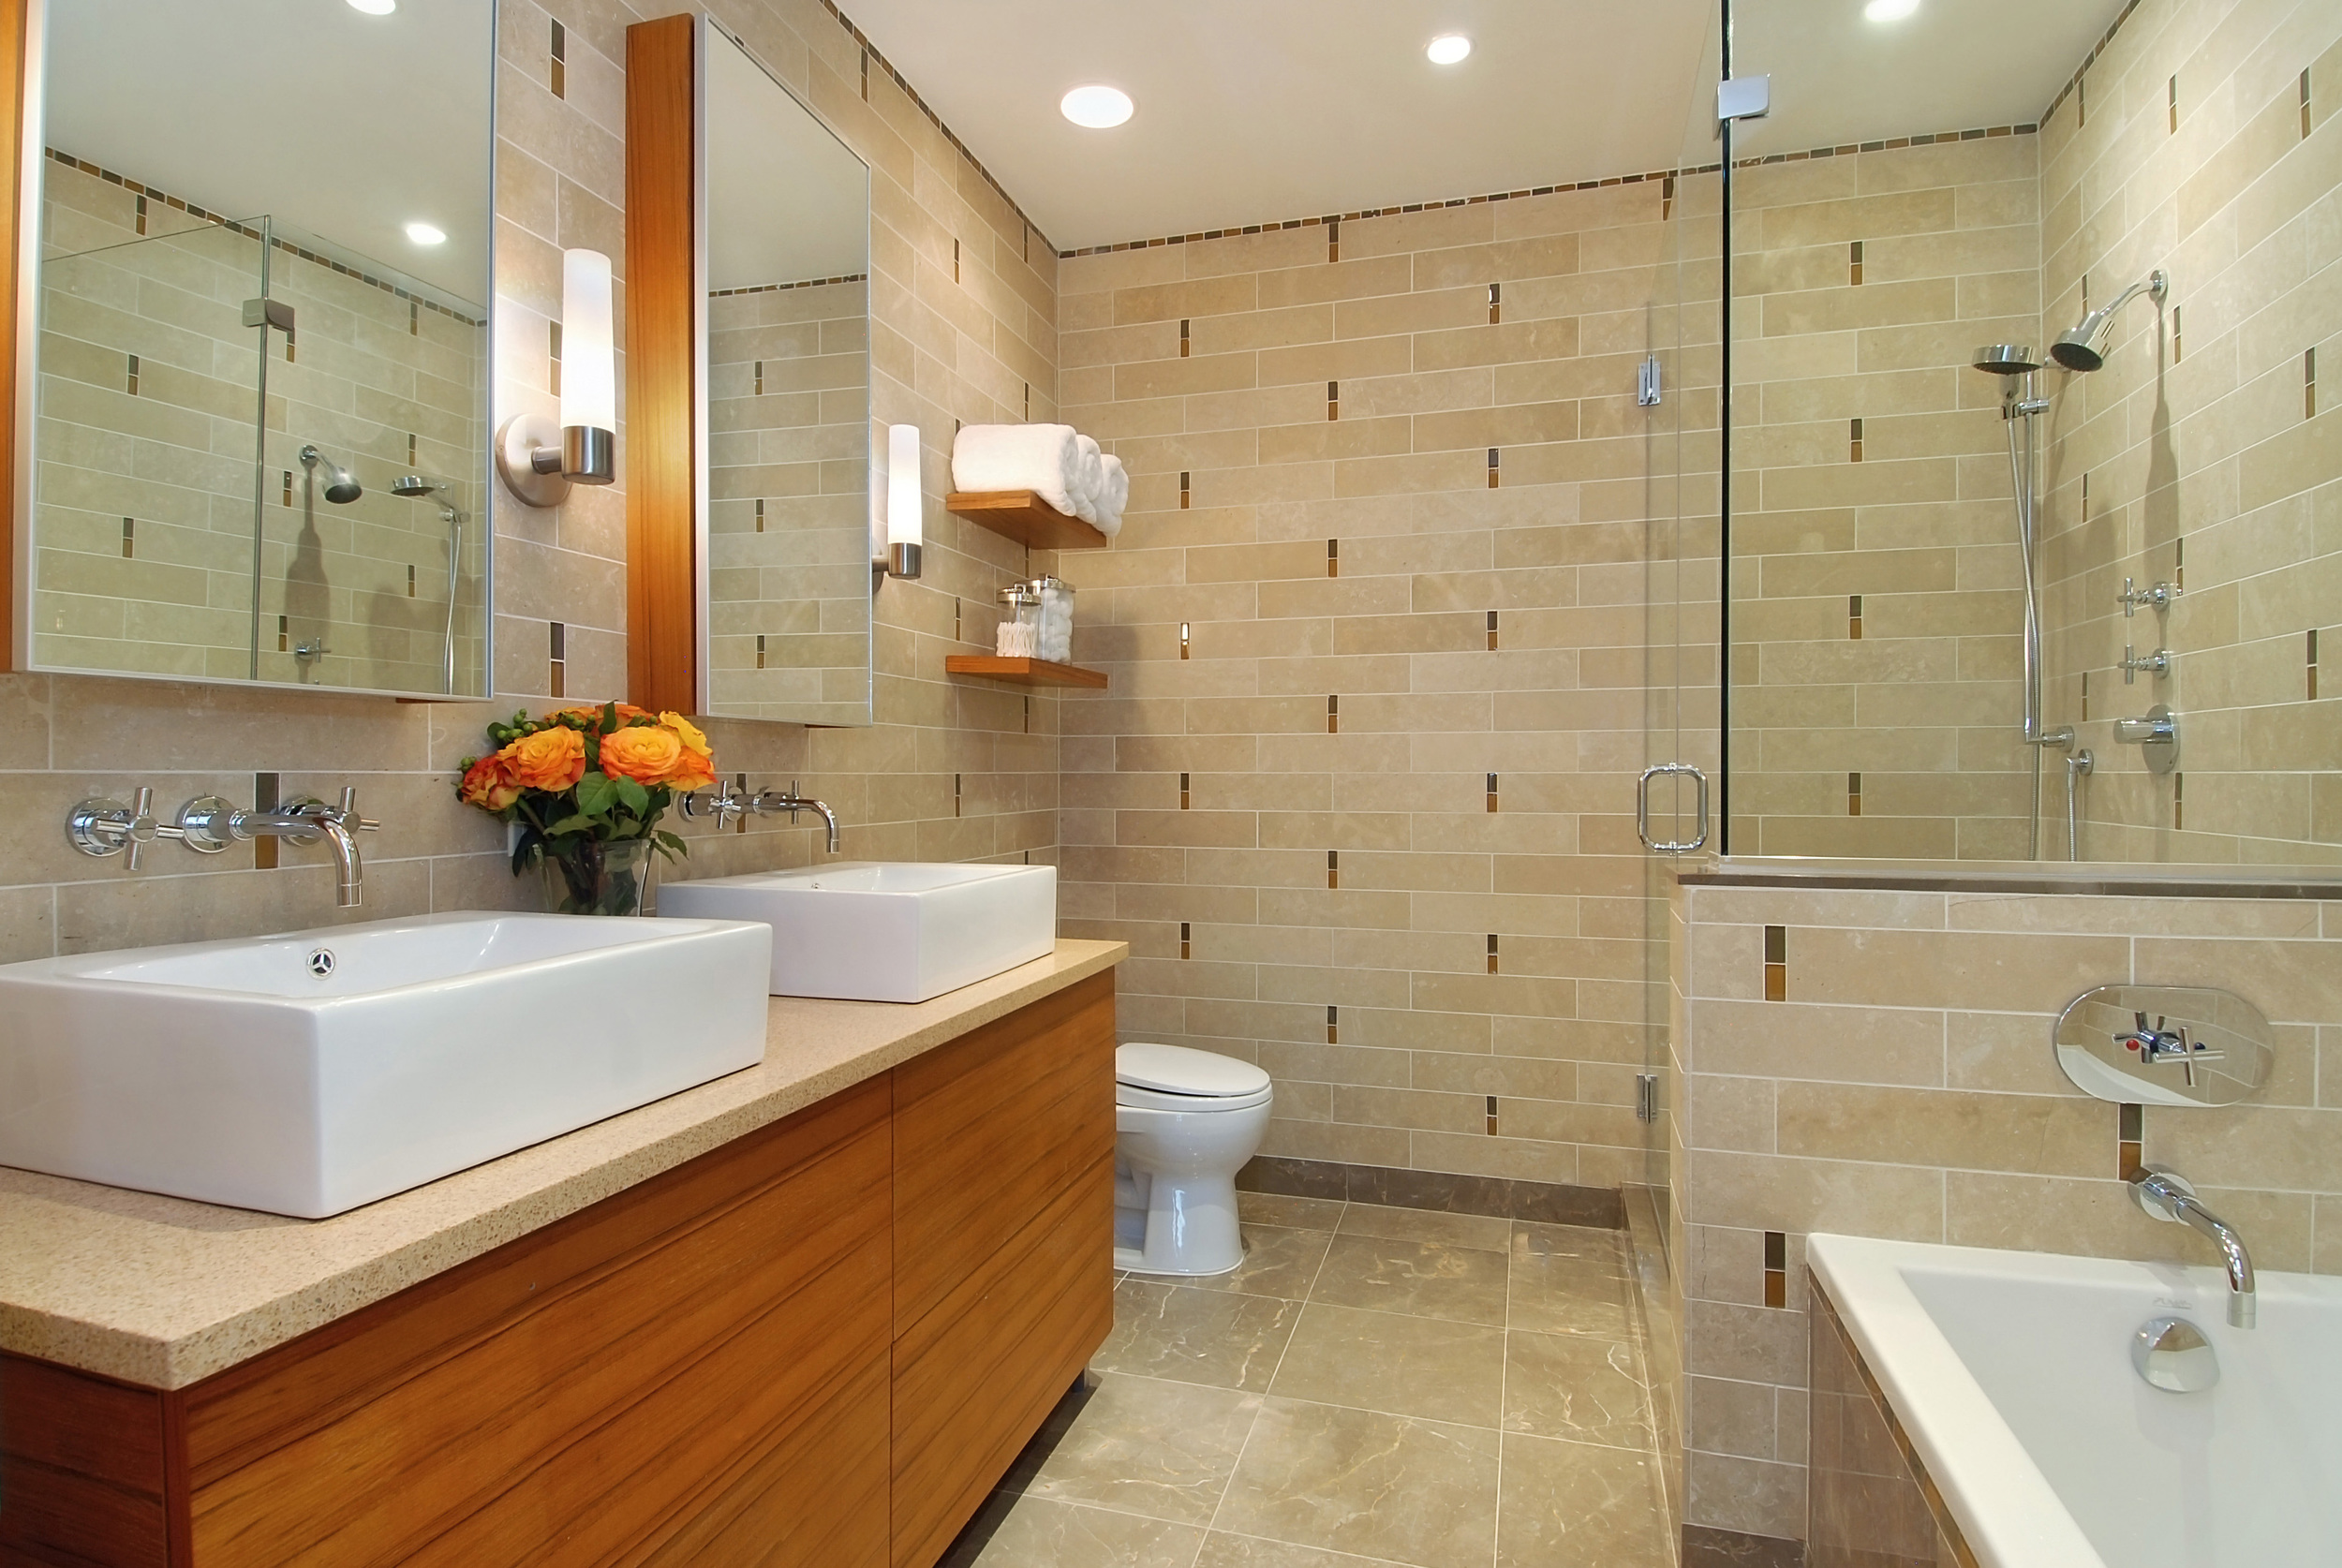 500 4th Avenue. Tobin Parnes Design. New York, NY. Residential. Bathroom.